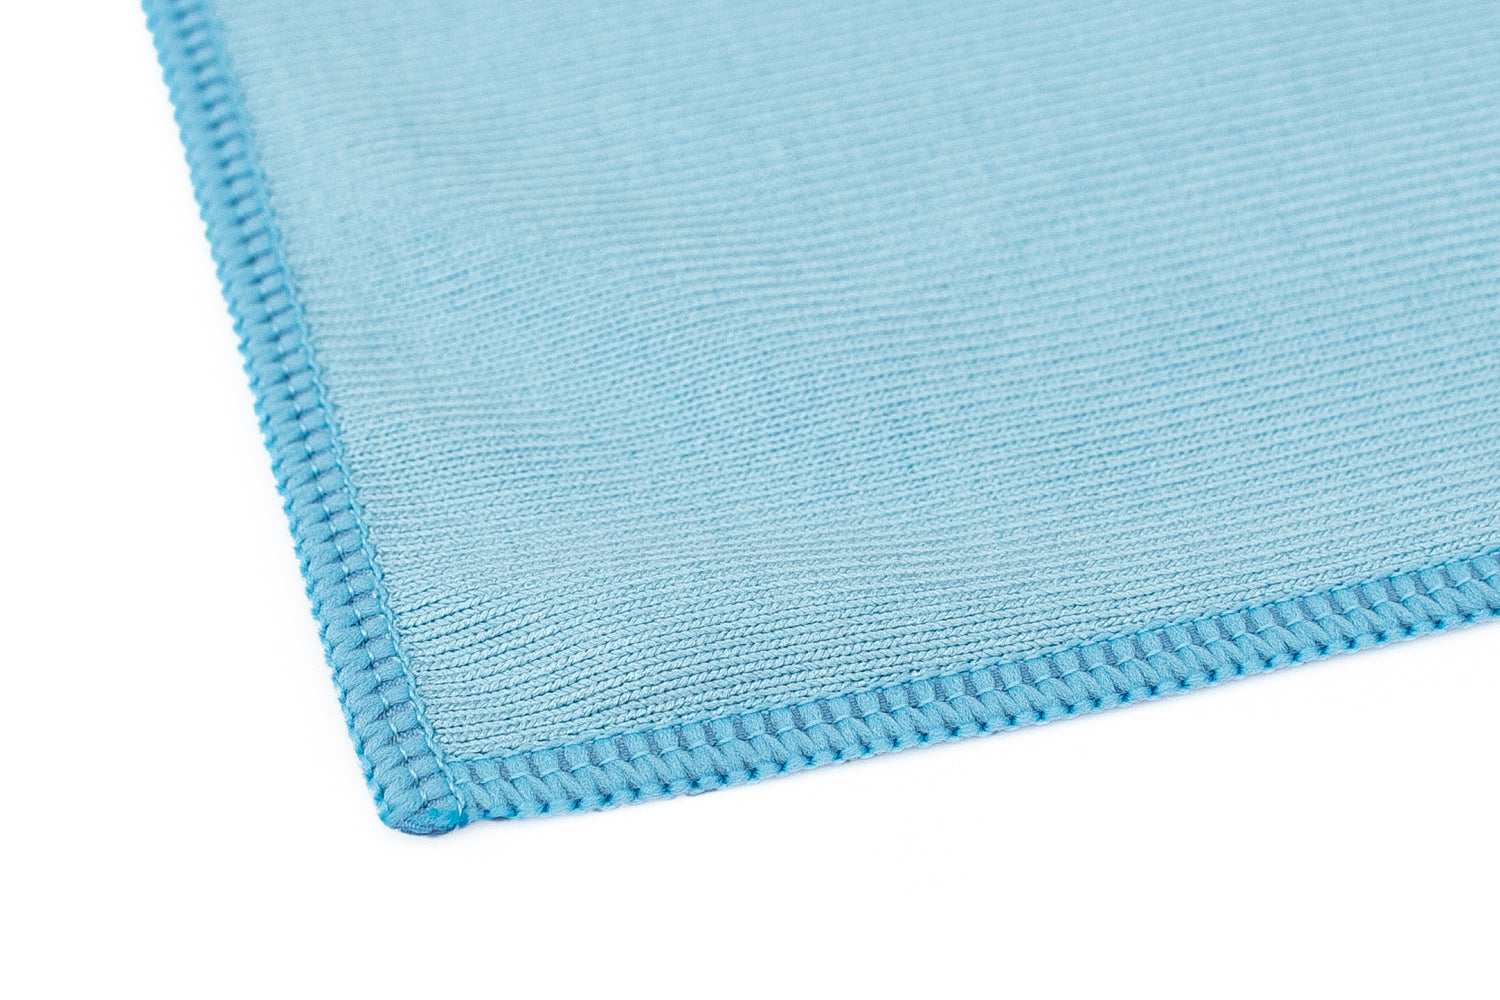 The Rag Company Premium Korean Blue glass and window Towel